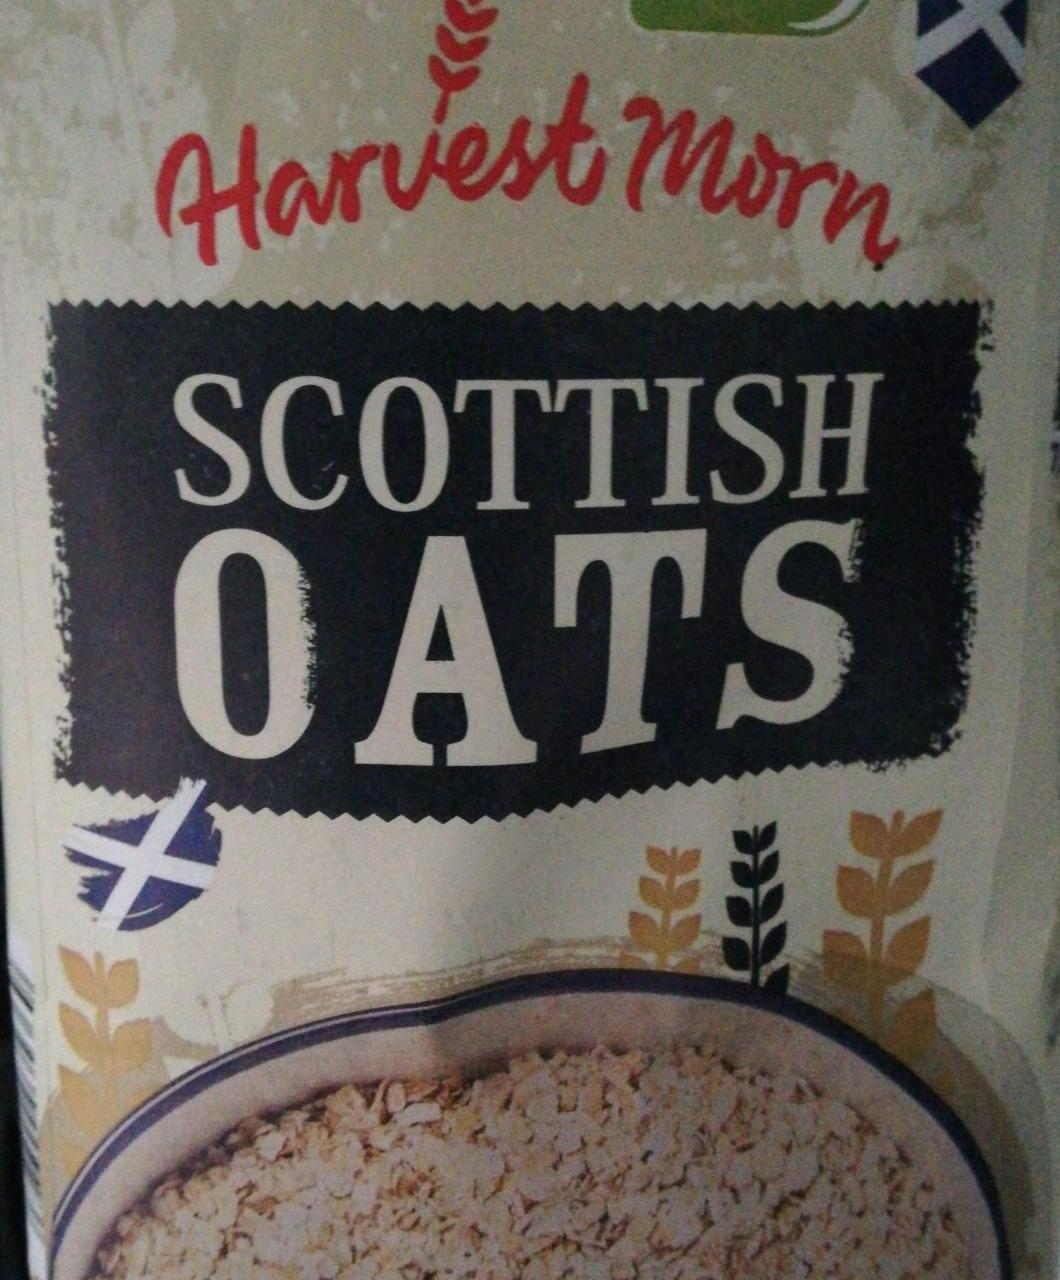 Fotografie - Scottish oats Harvest Morn